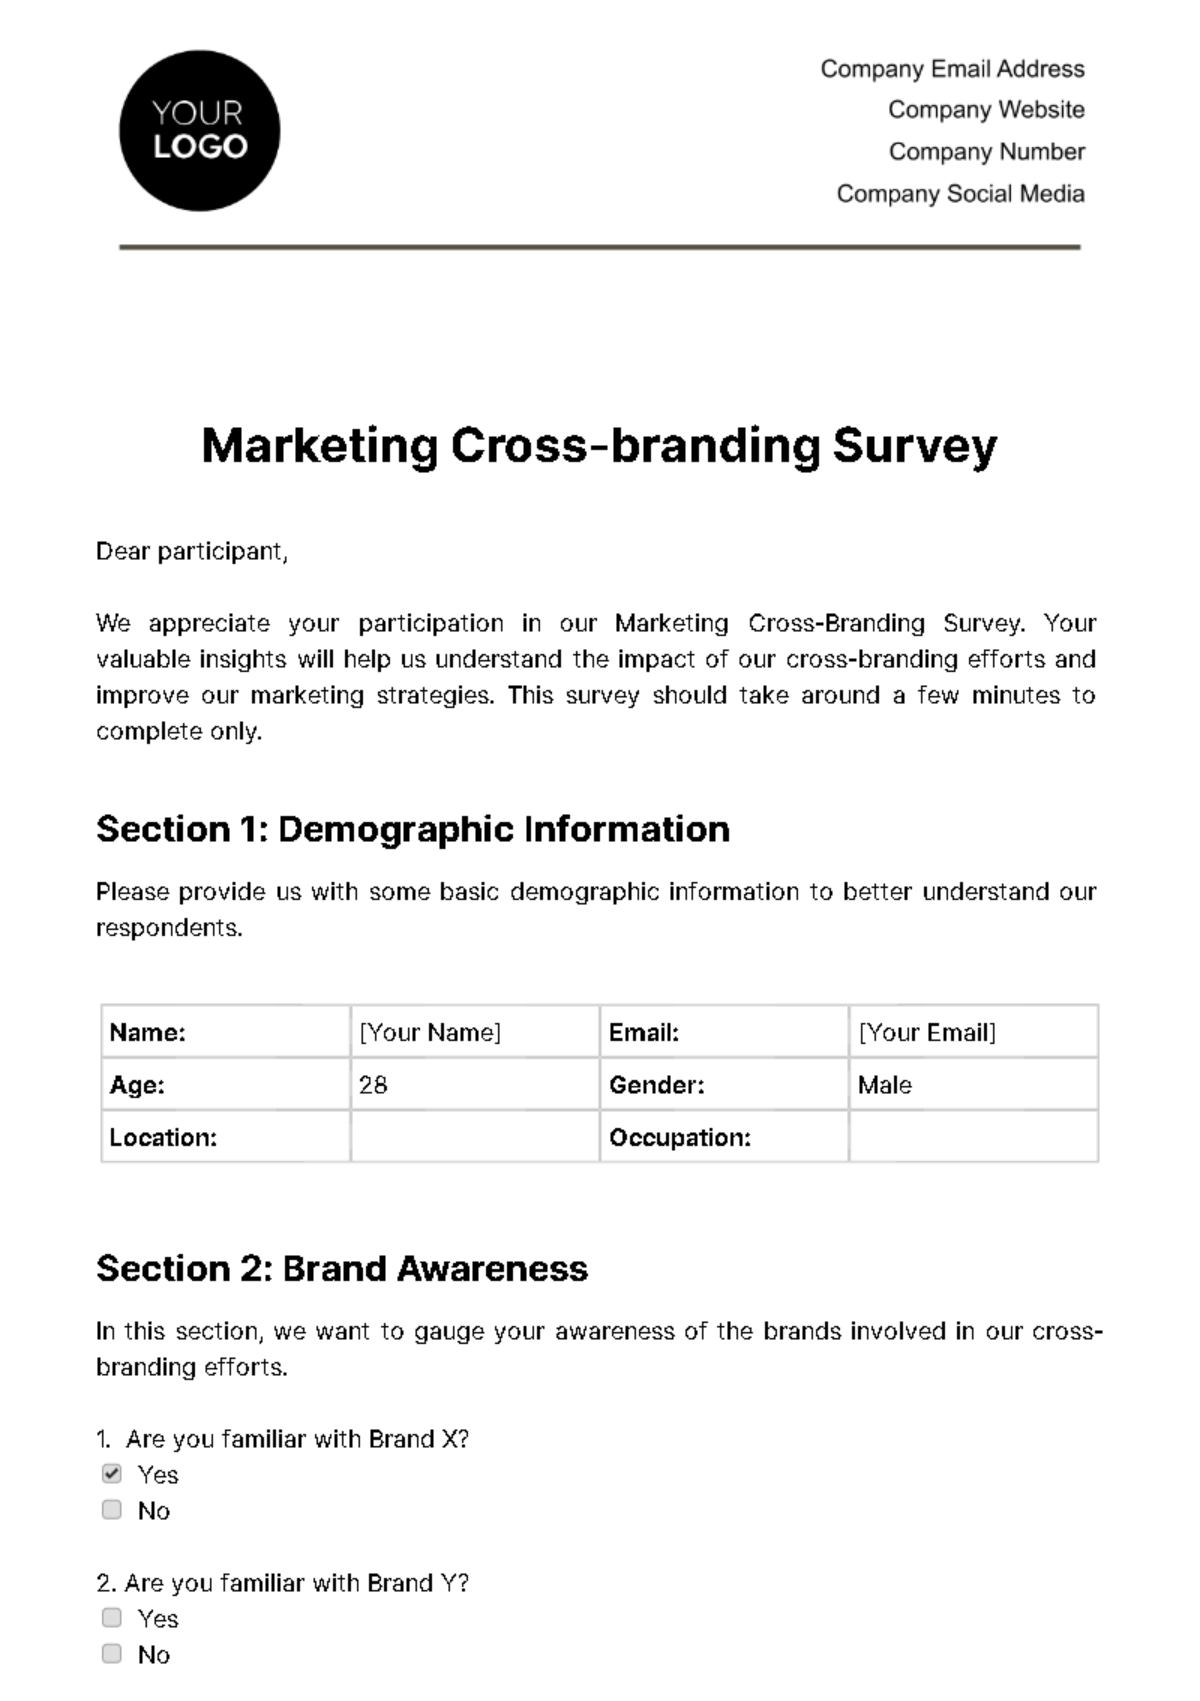 Free Marketing Cross-branding Survey Template